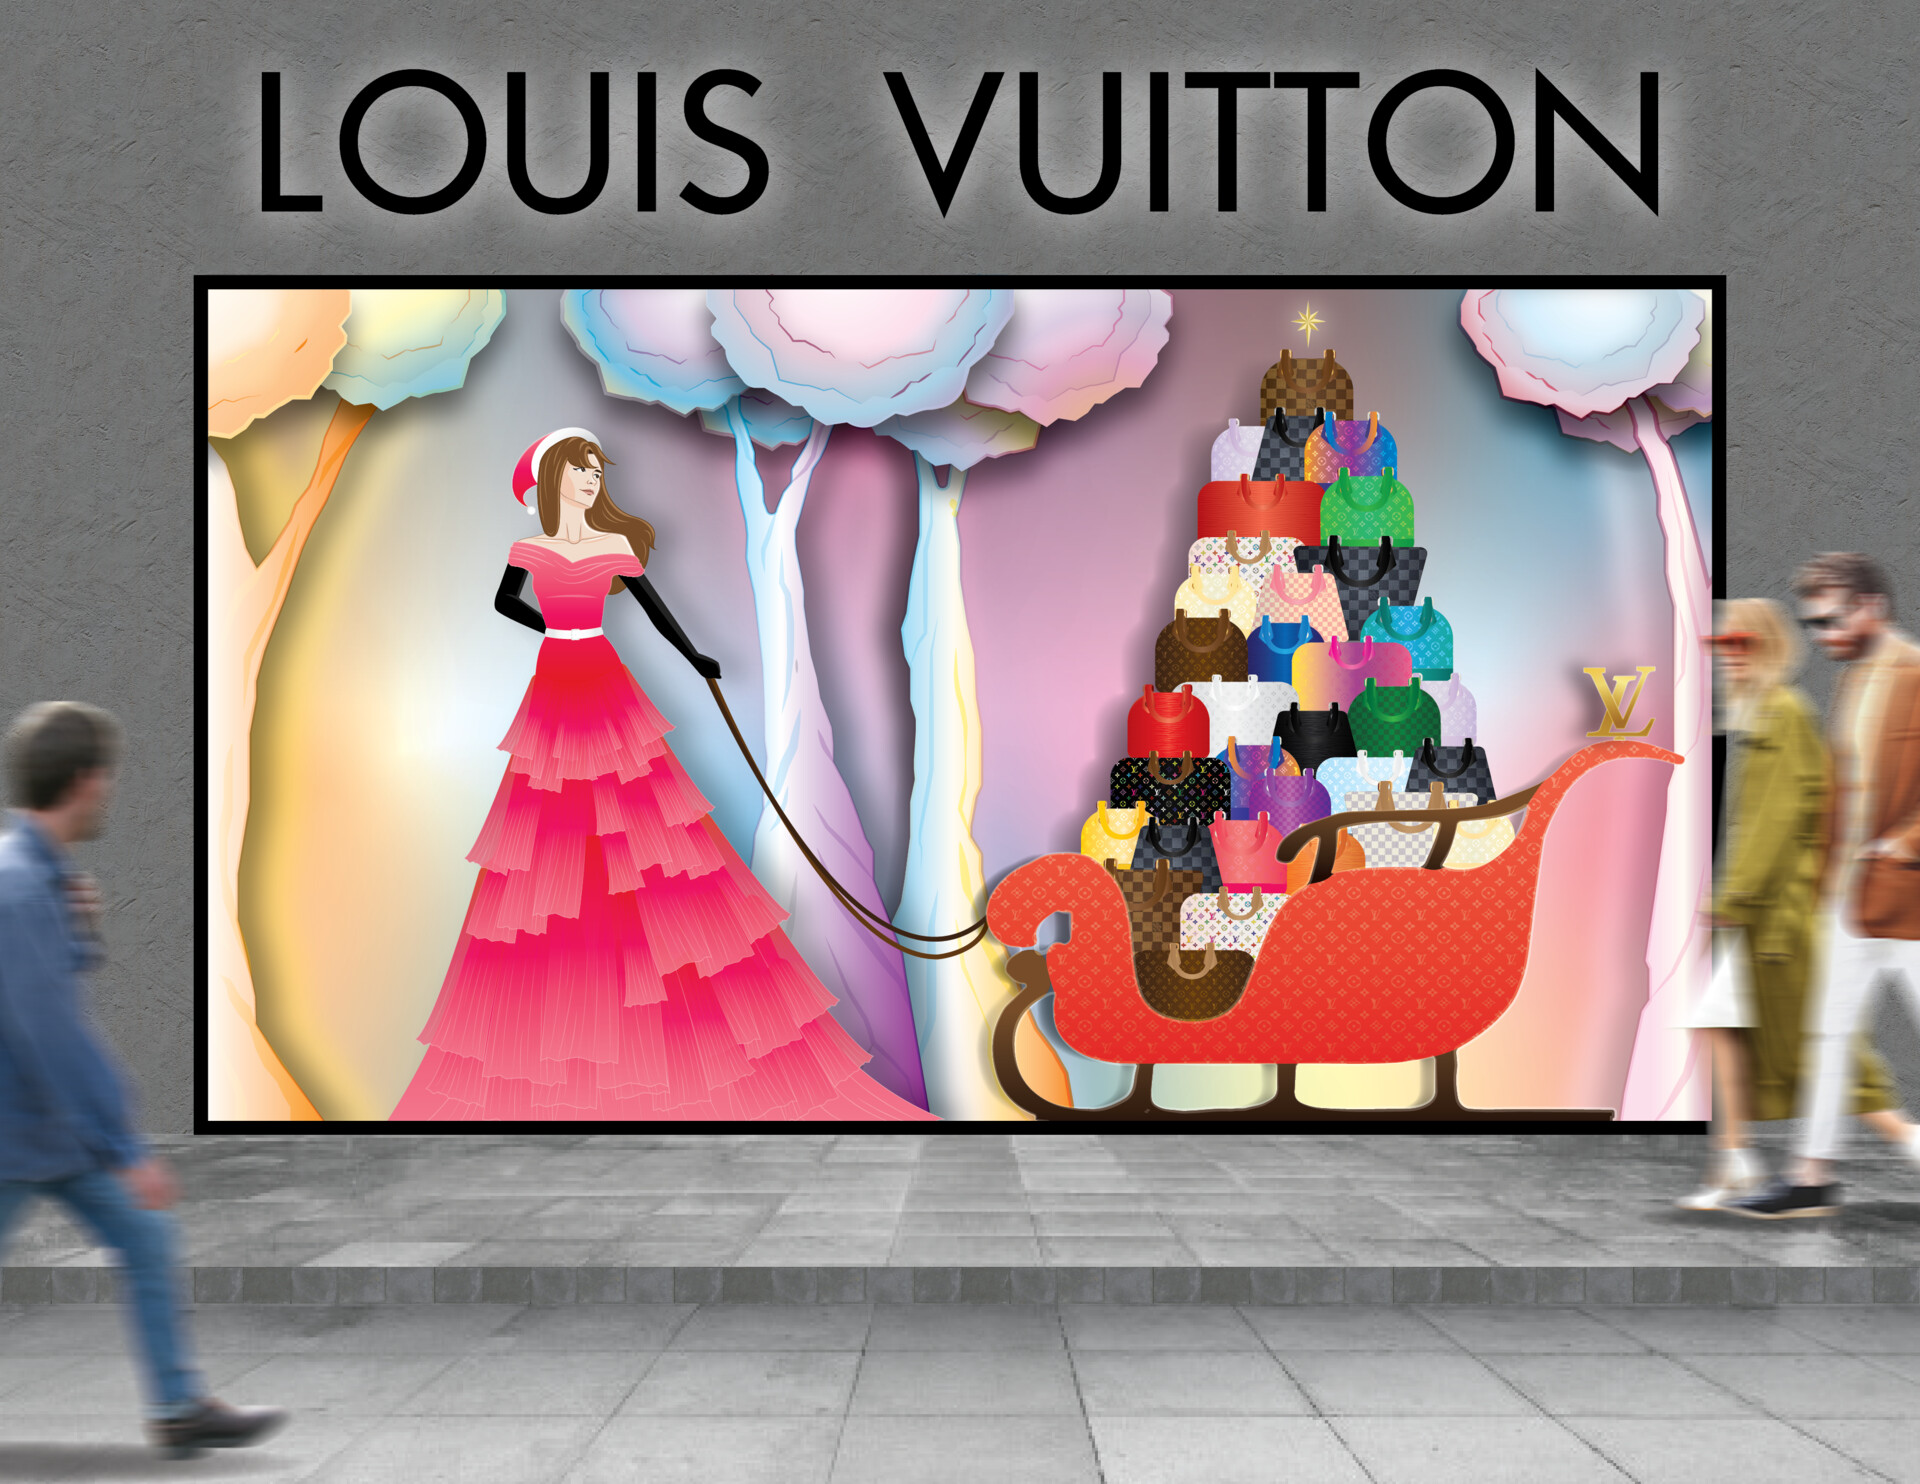 Louis Vuitton Visual Merchandising Jobs